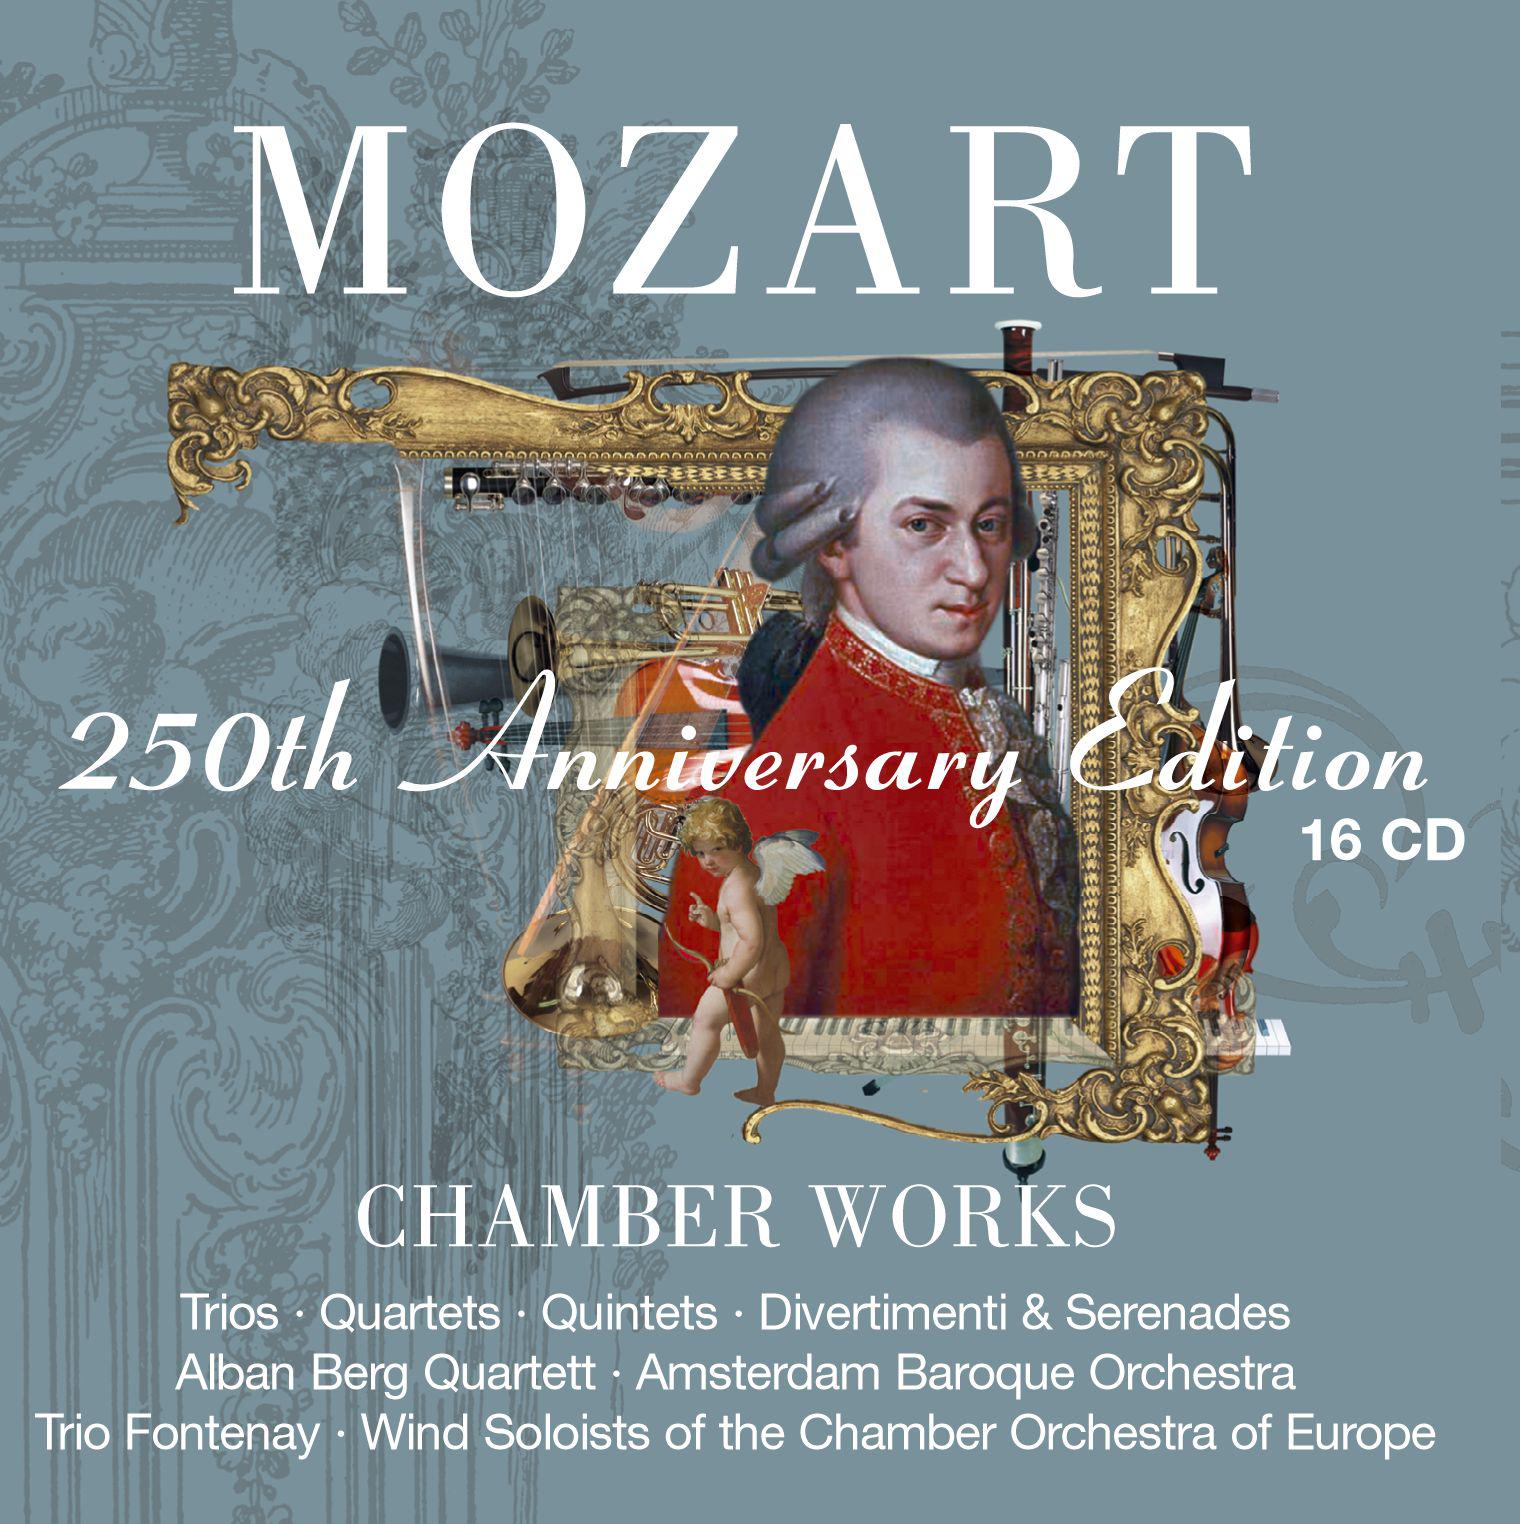 Mozart:Divertimento in B flat major K439b No.5 : IV Romance - Andante